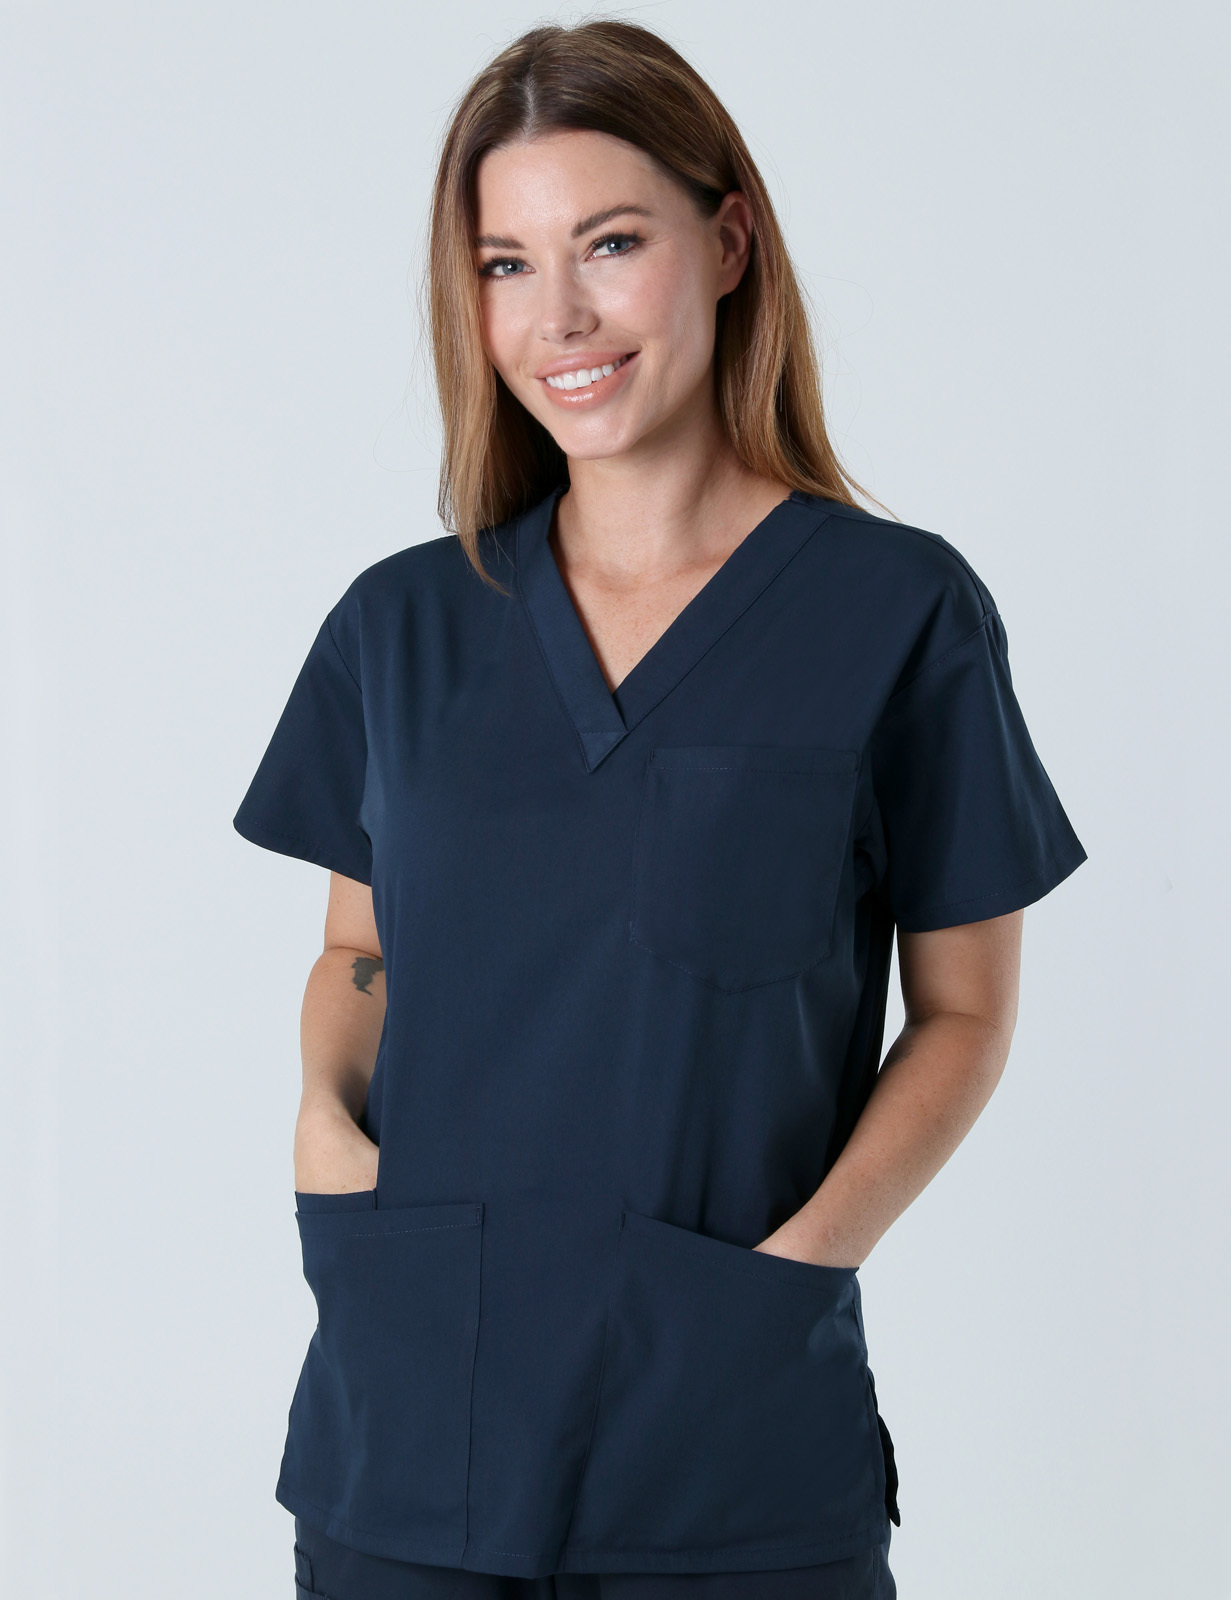 Ipswich Hospital Nurse - Ward 7C Uniform Set Bundle (4 Pocket Top and Cargo Pants in Navy incl Logos)